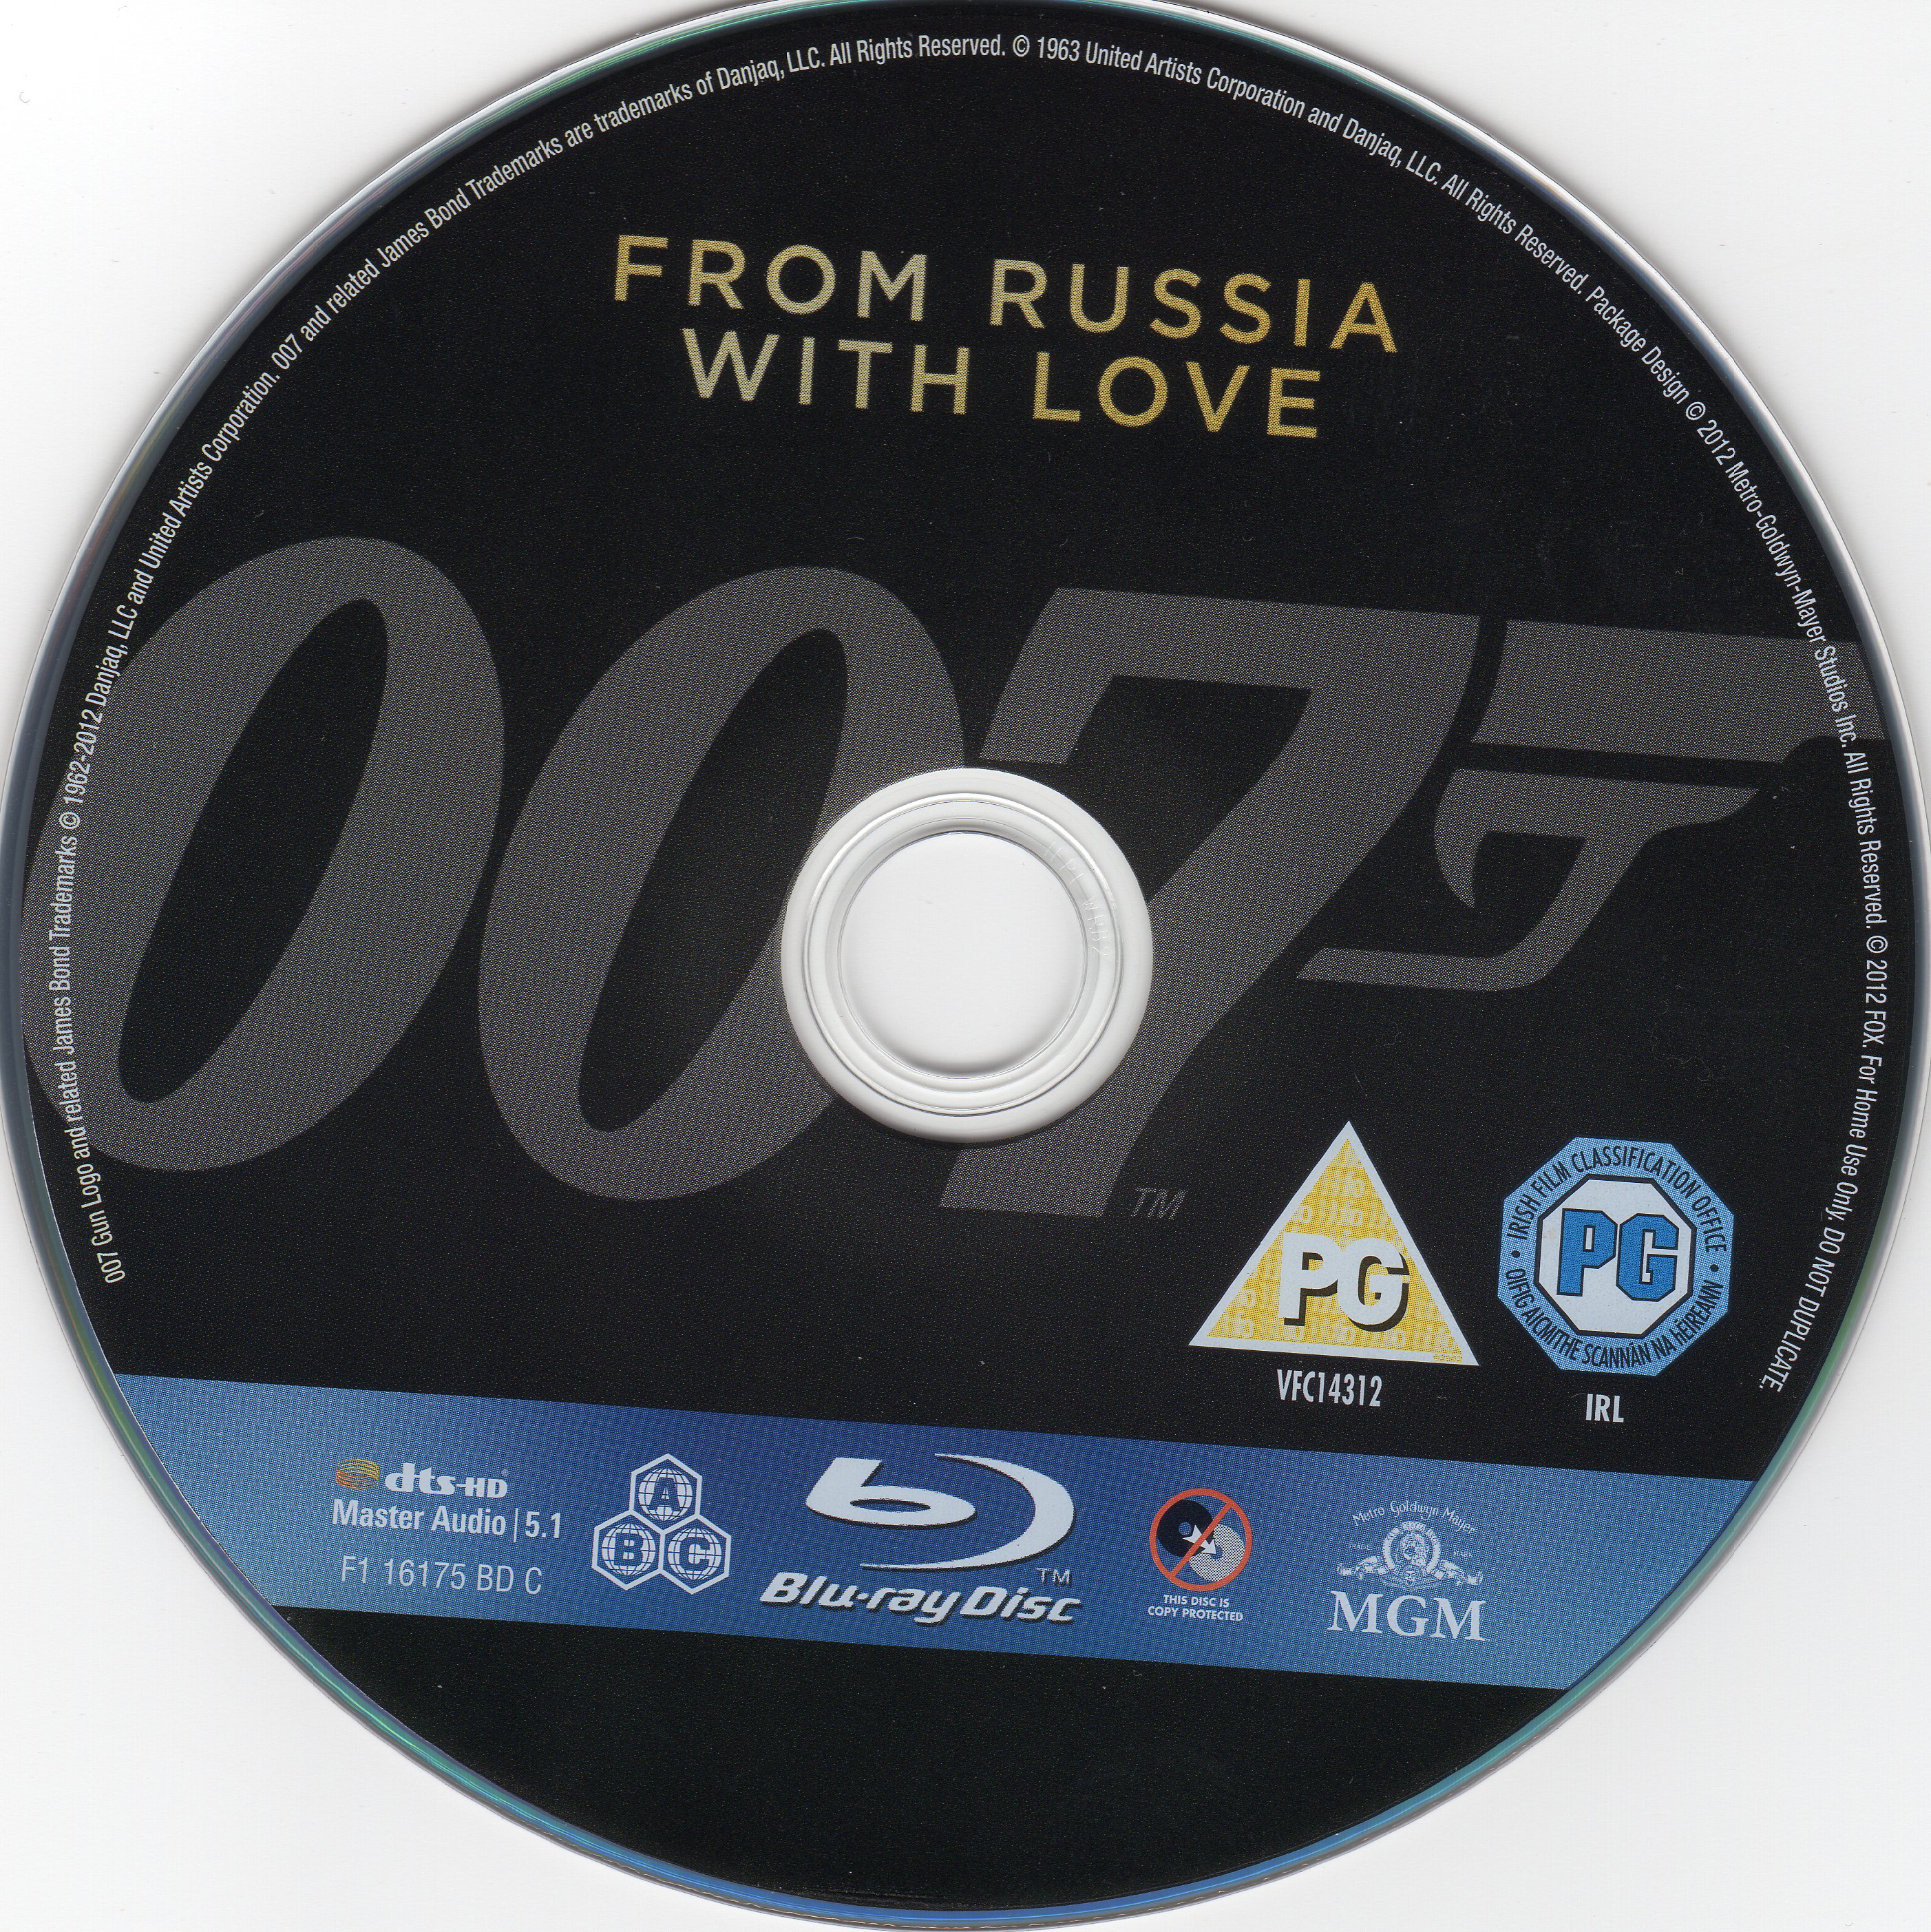 James Bond 007 Bons baisers de Russie (BLU-RAY)